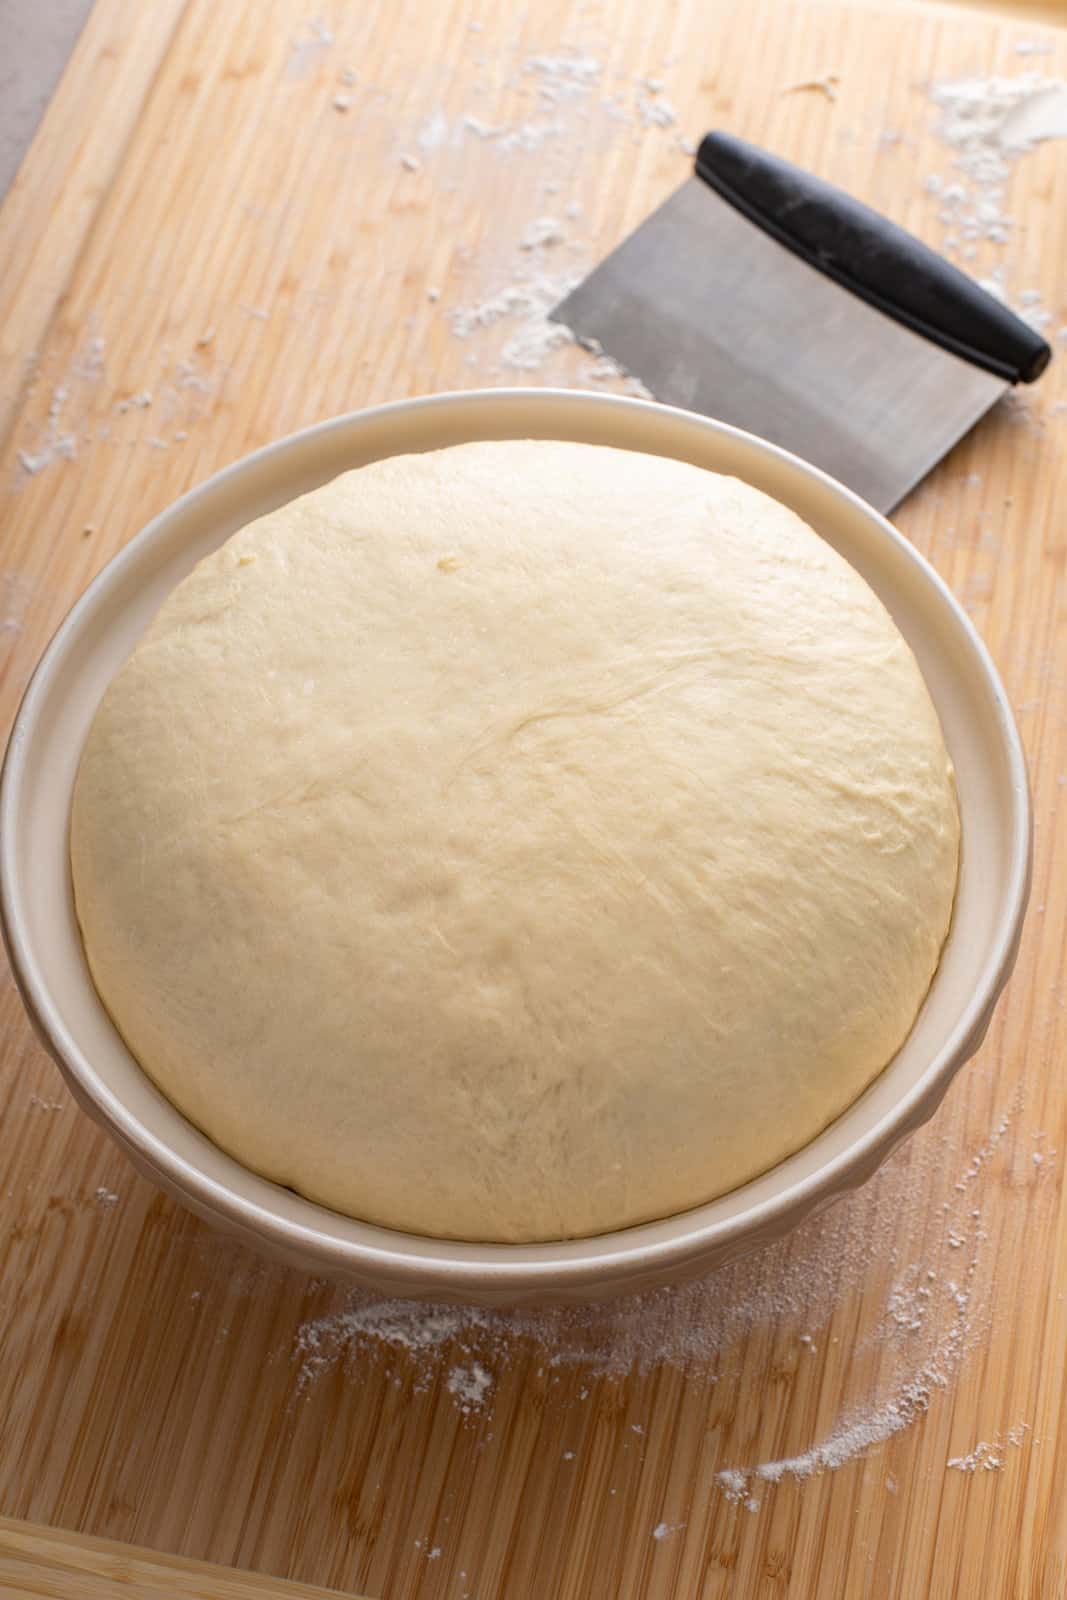 Risen texas roadhouse roll dough in a ceramic mixing bowl.